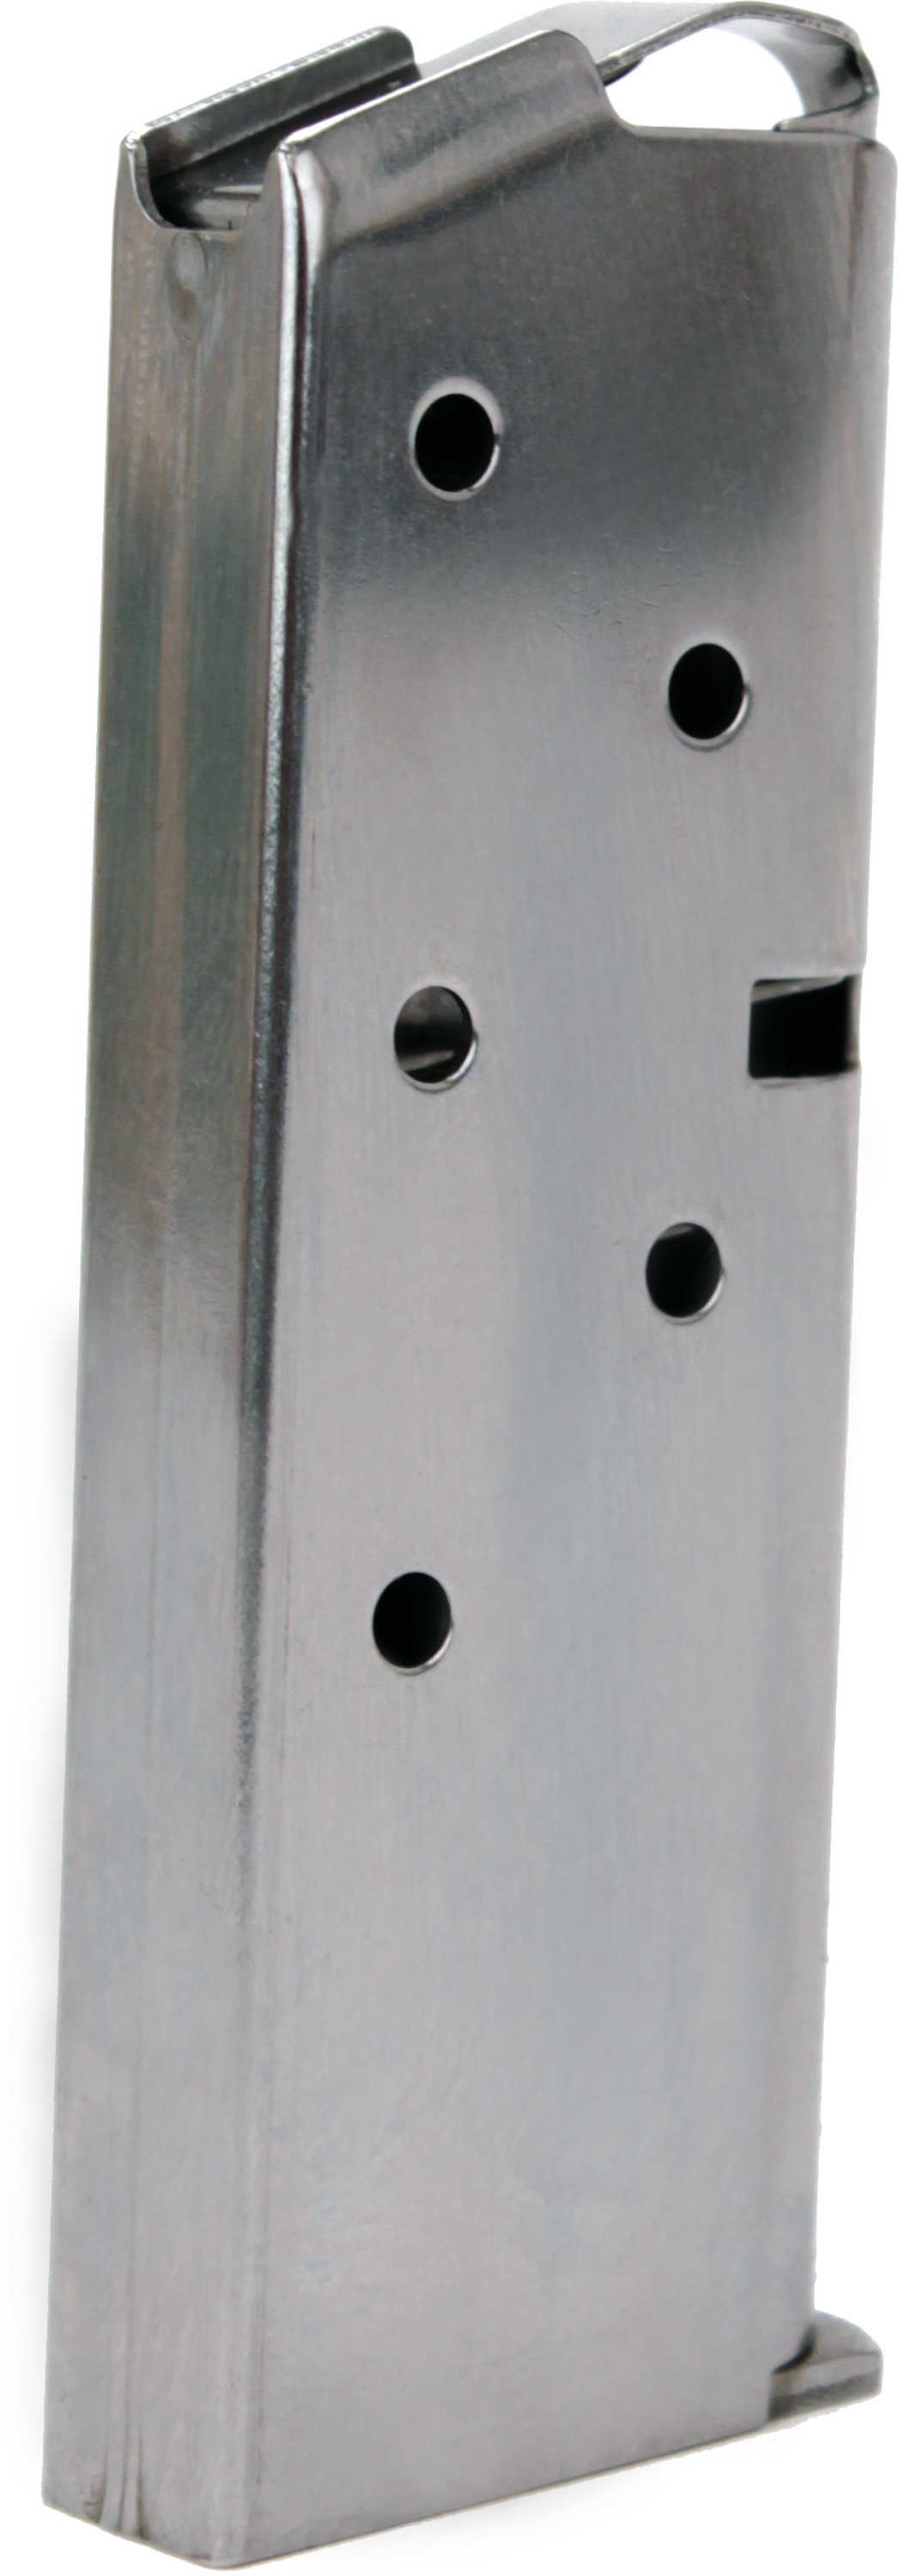 Sig P238 Magazine 380 ACP - Stainless Steel - 6 Round - Flush Fit